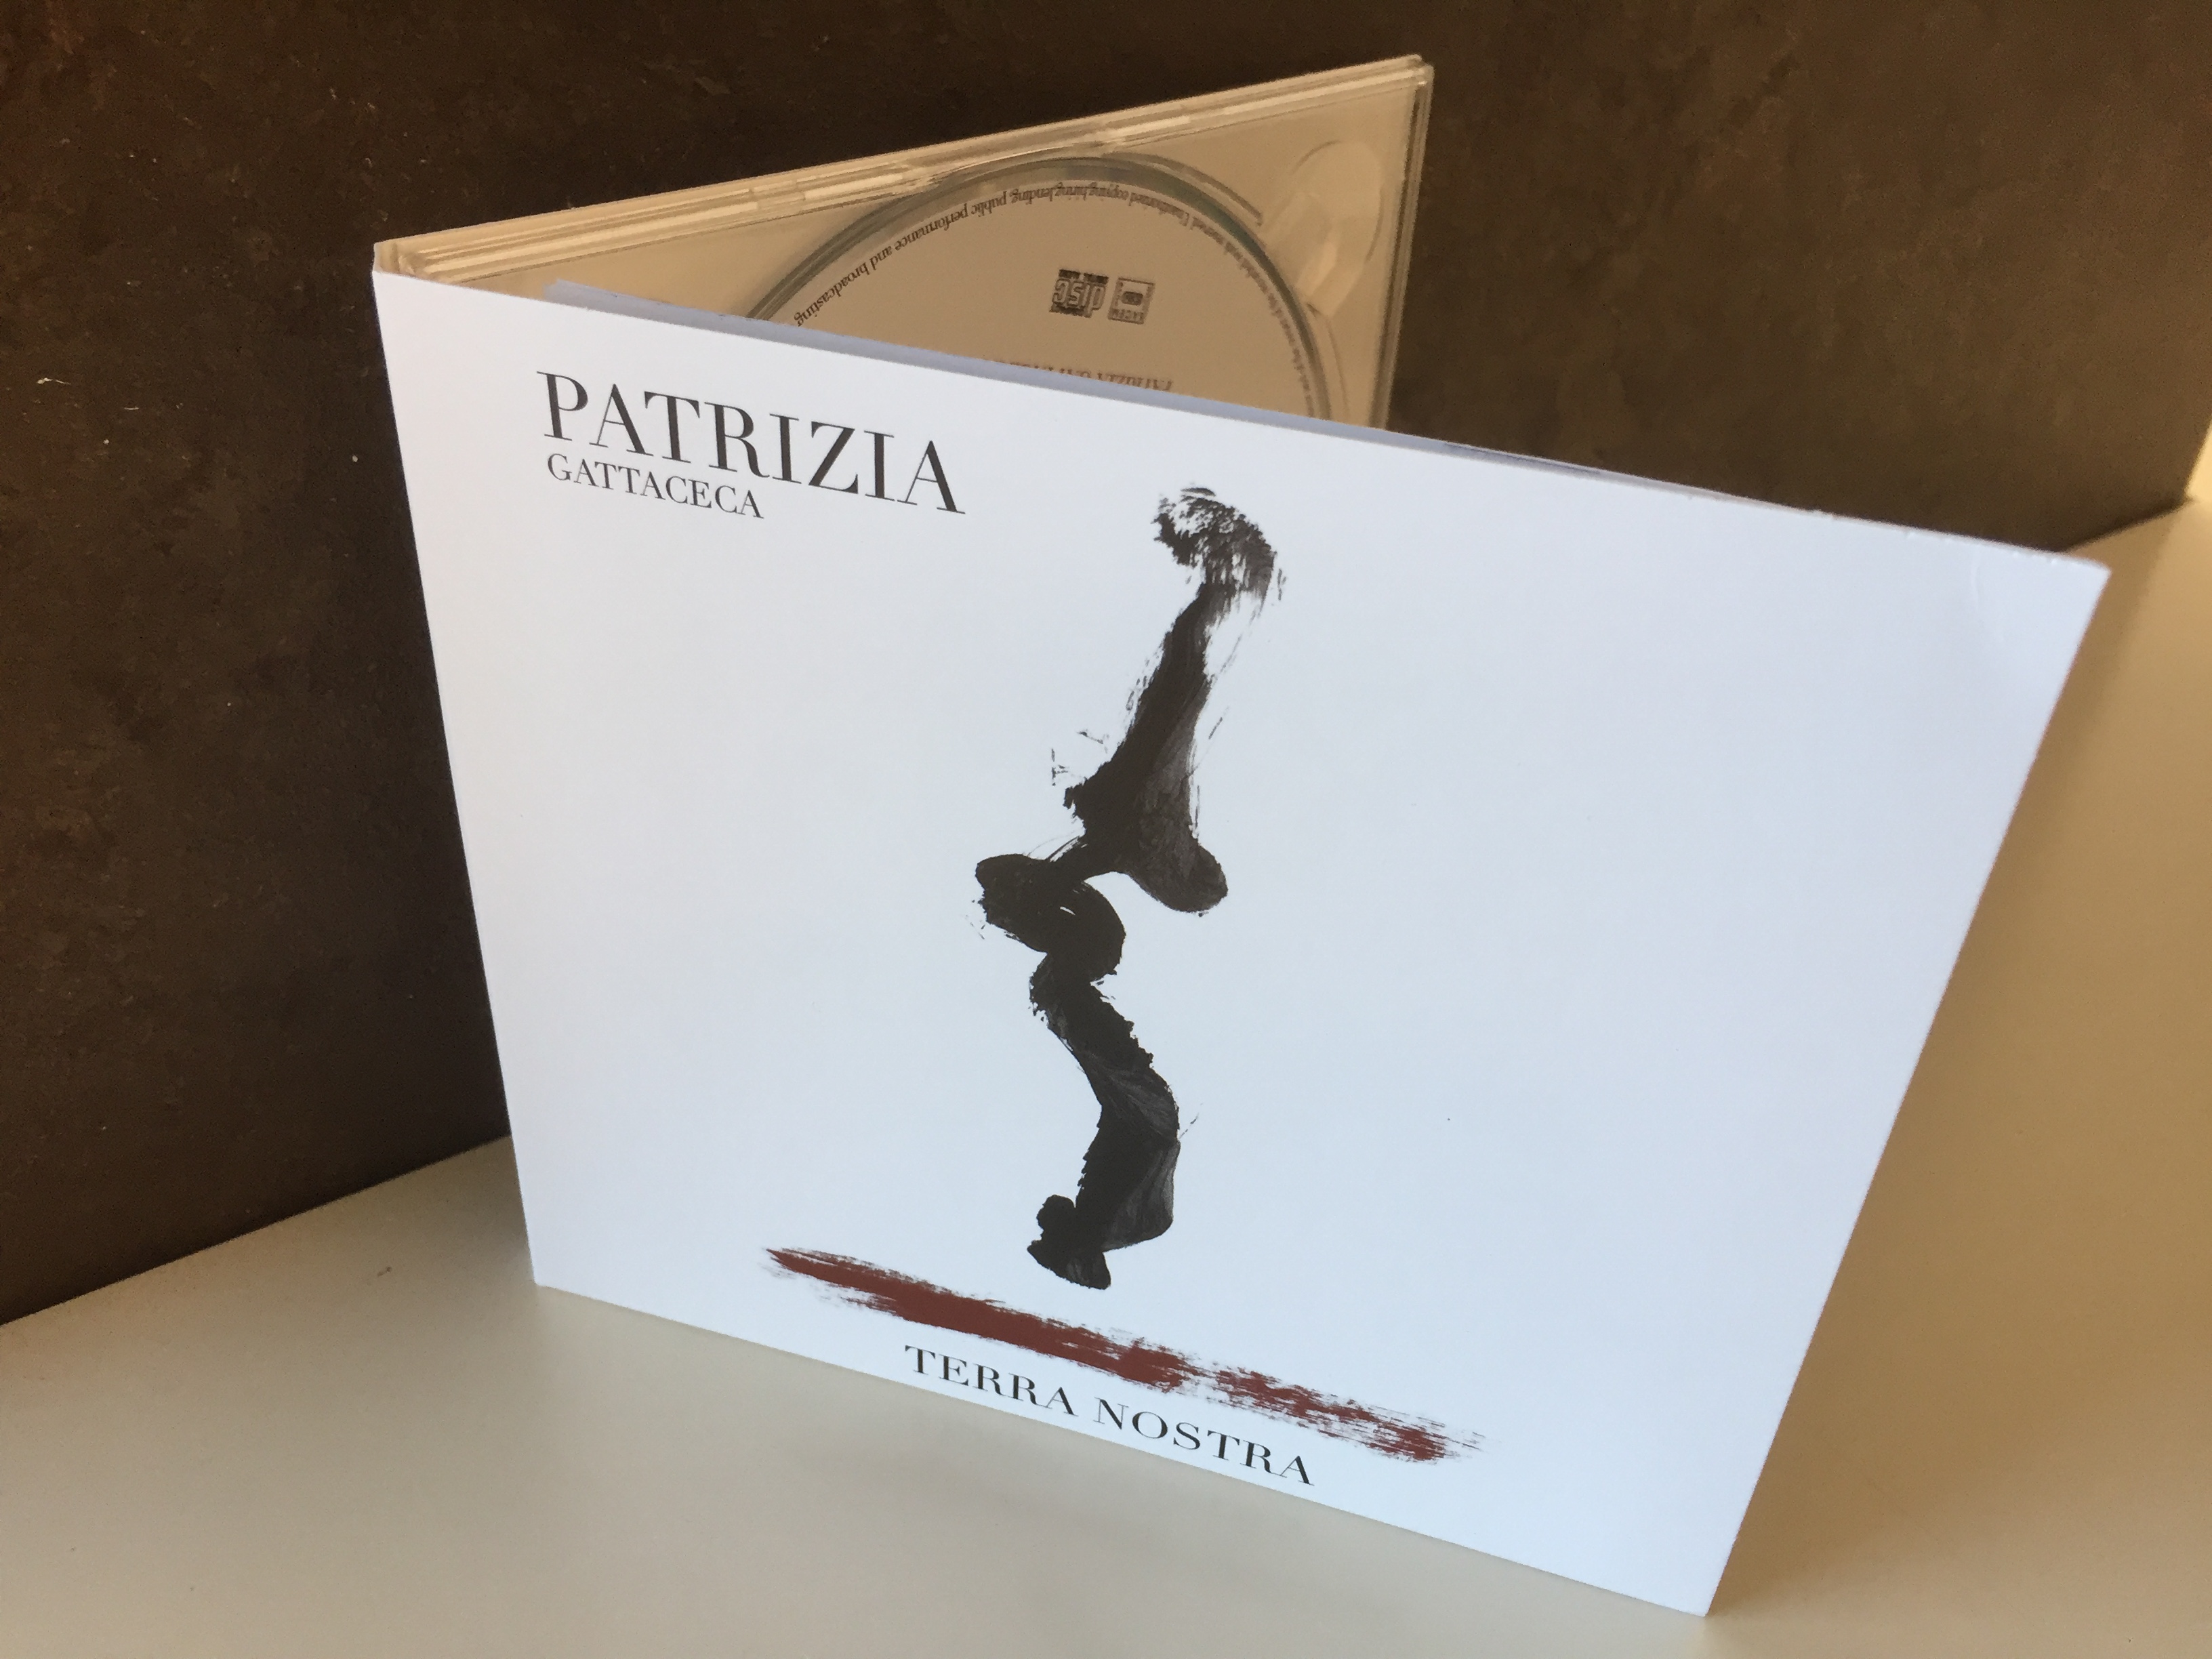 Musique : L'invitation au voyage de Patrizia Gattaceca